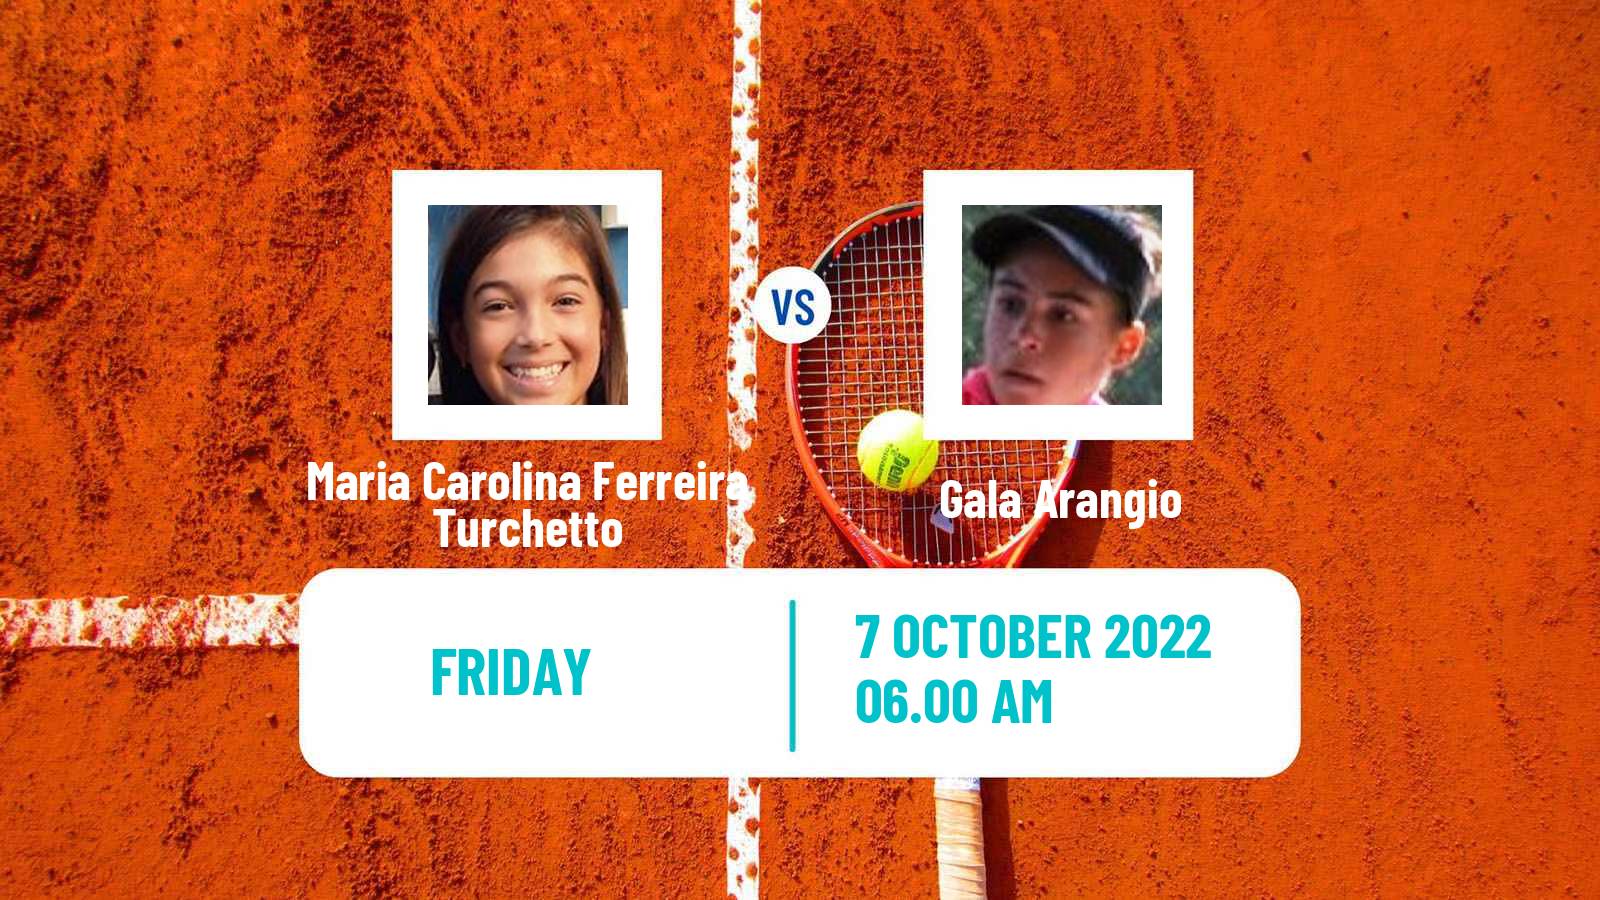 Tennis ITF Tournaments Maria Carolina Ferreira Turchetto - Gala Arangio